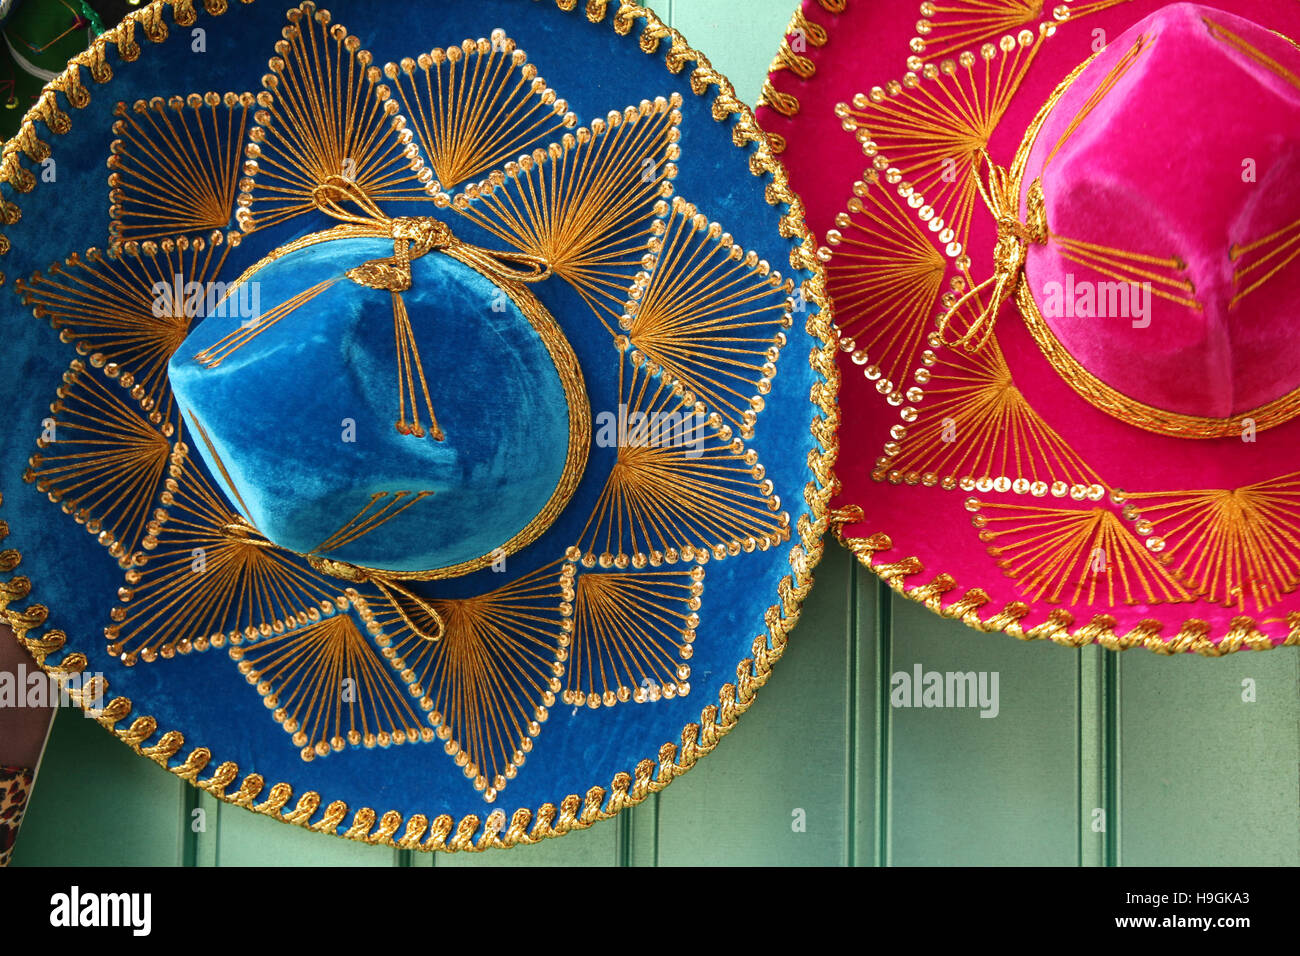 Colourful blue & pink Mexican hats or sombreros hanging on a green door, Cozumel, Yucatan Peninsula, Quintana Roo, Mexico. Stock Photo